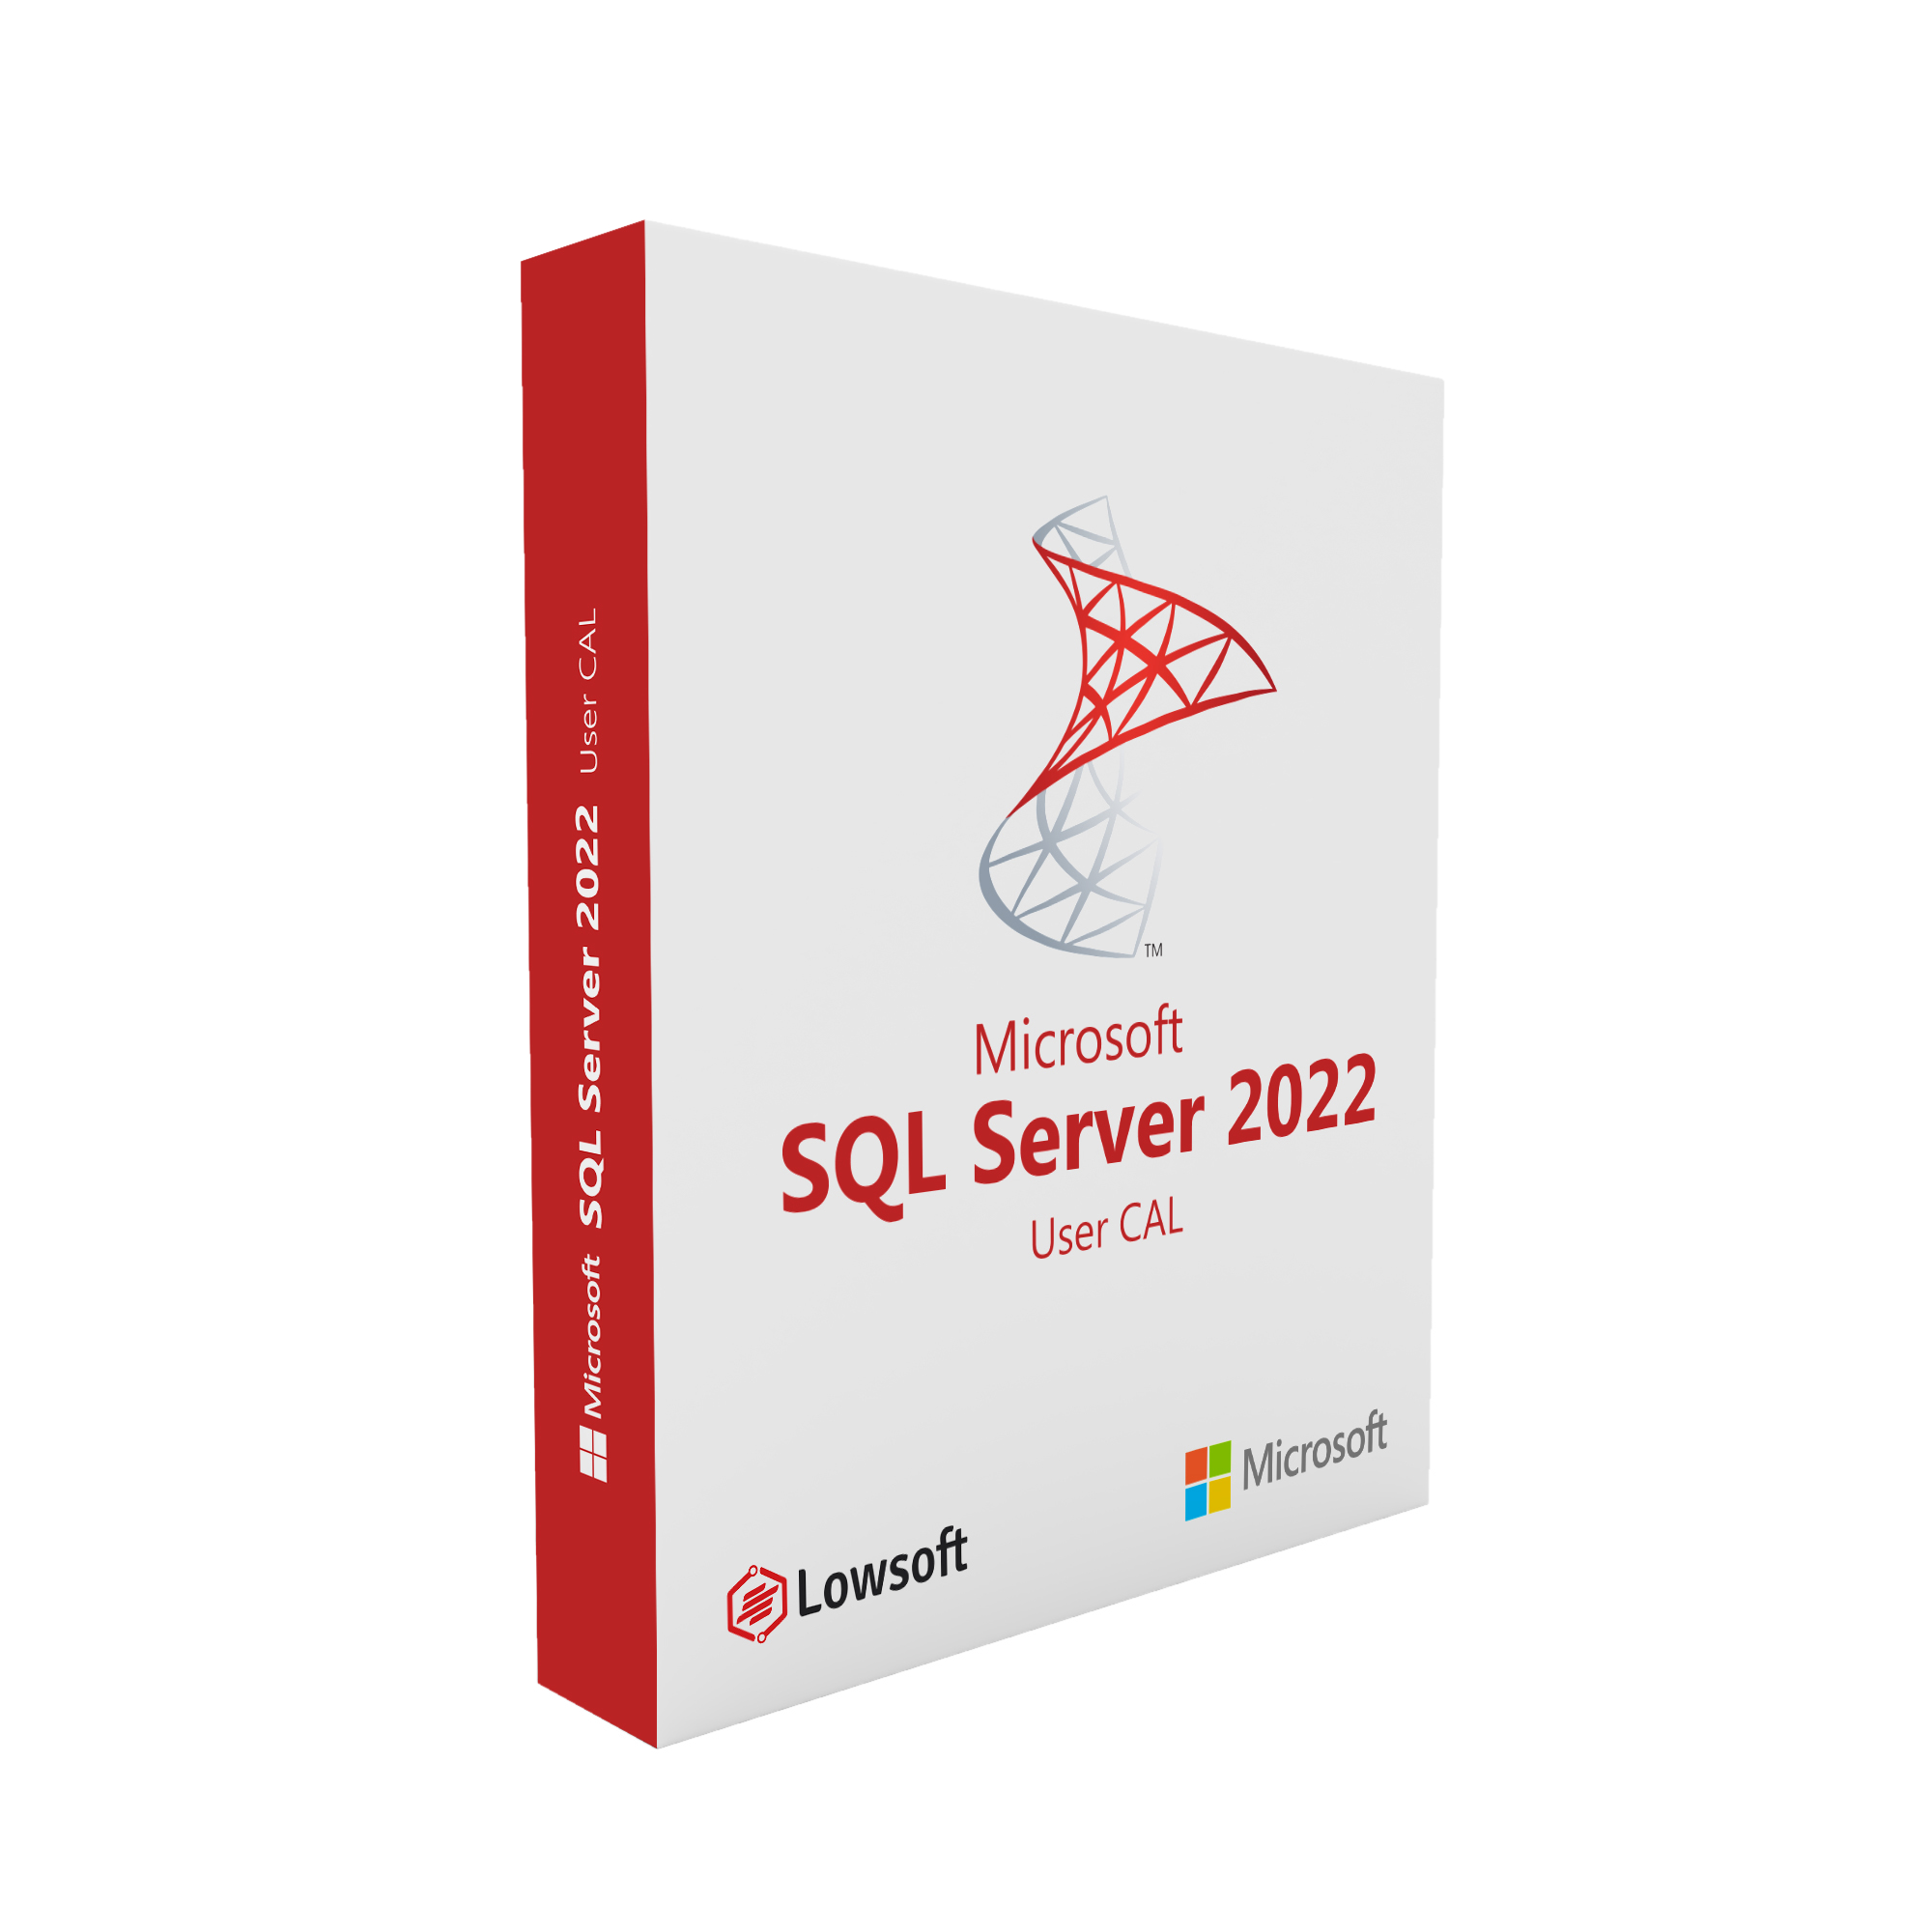 SQL Server 2022 User CAL